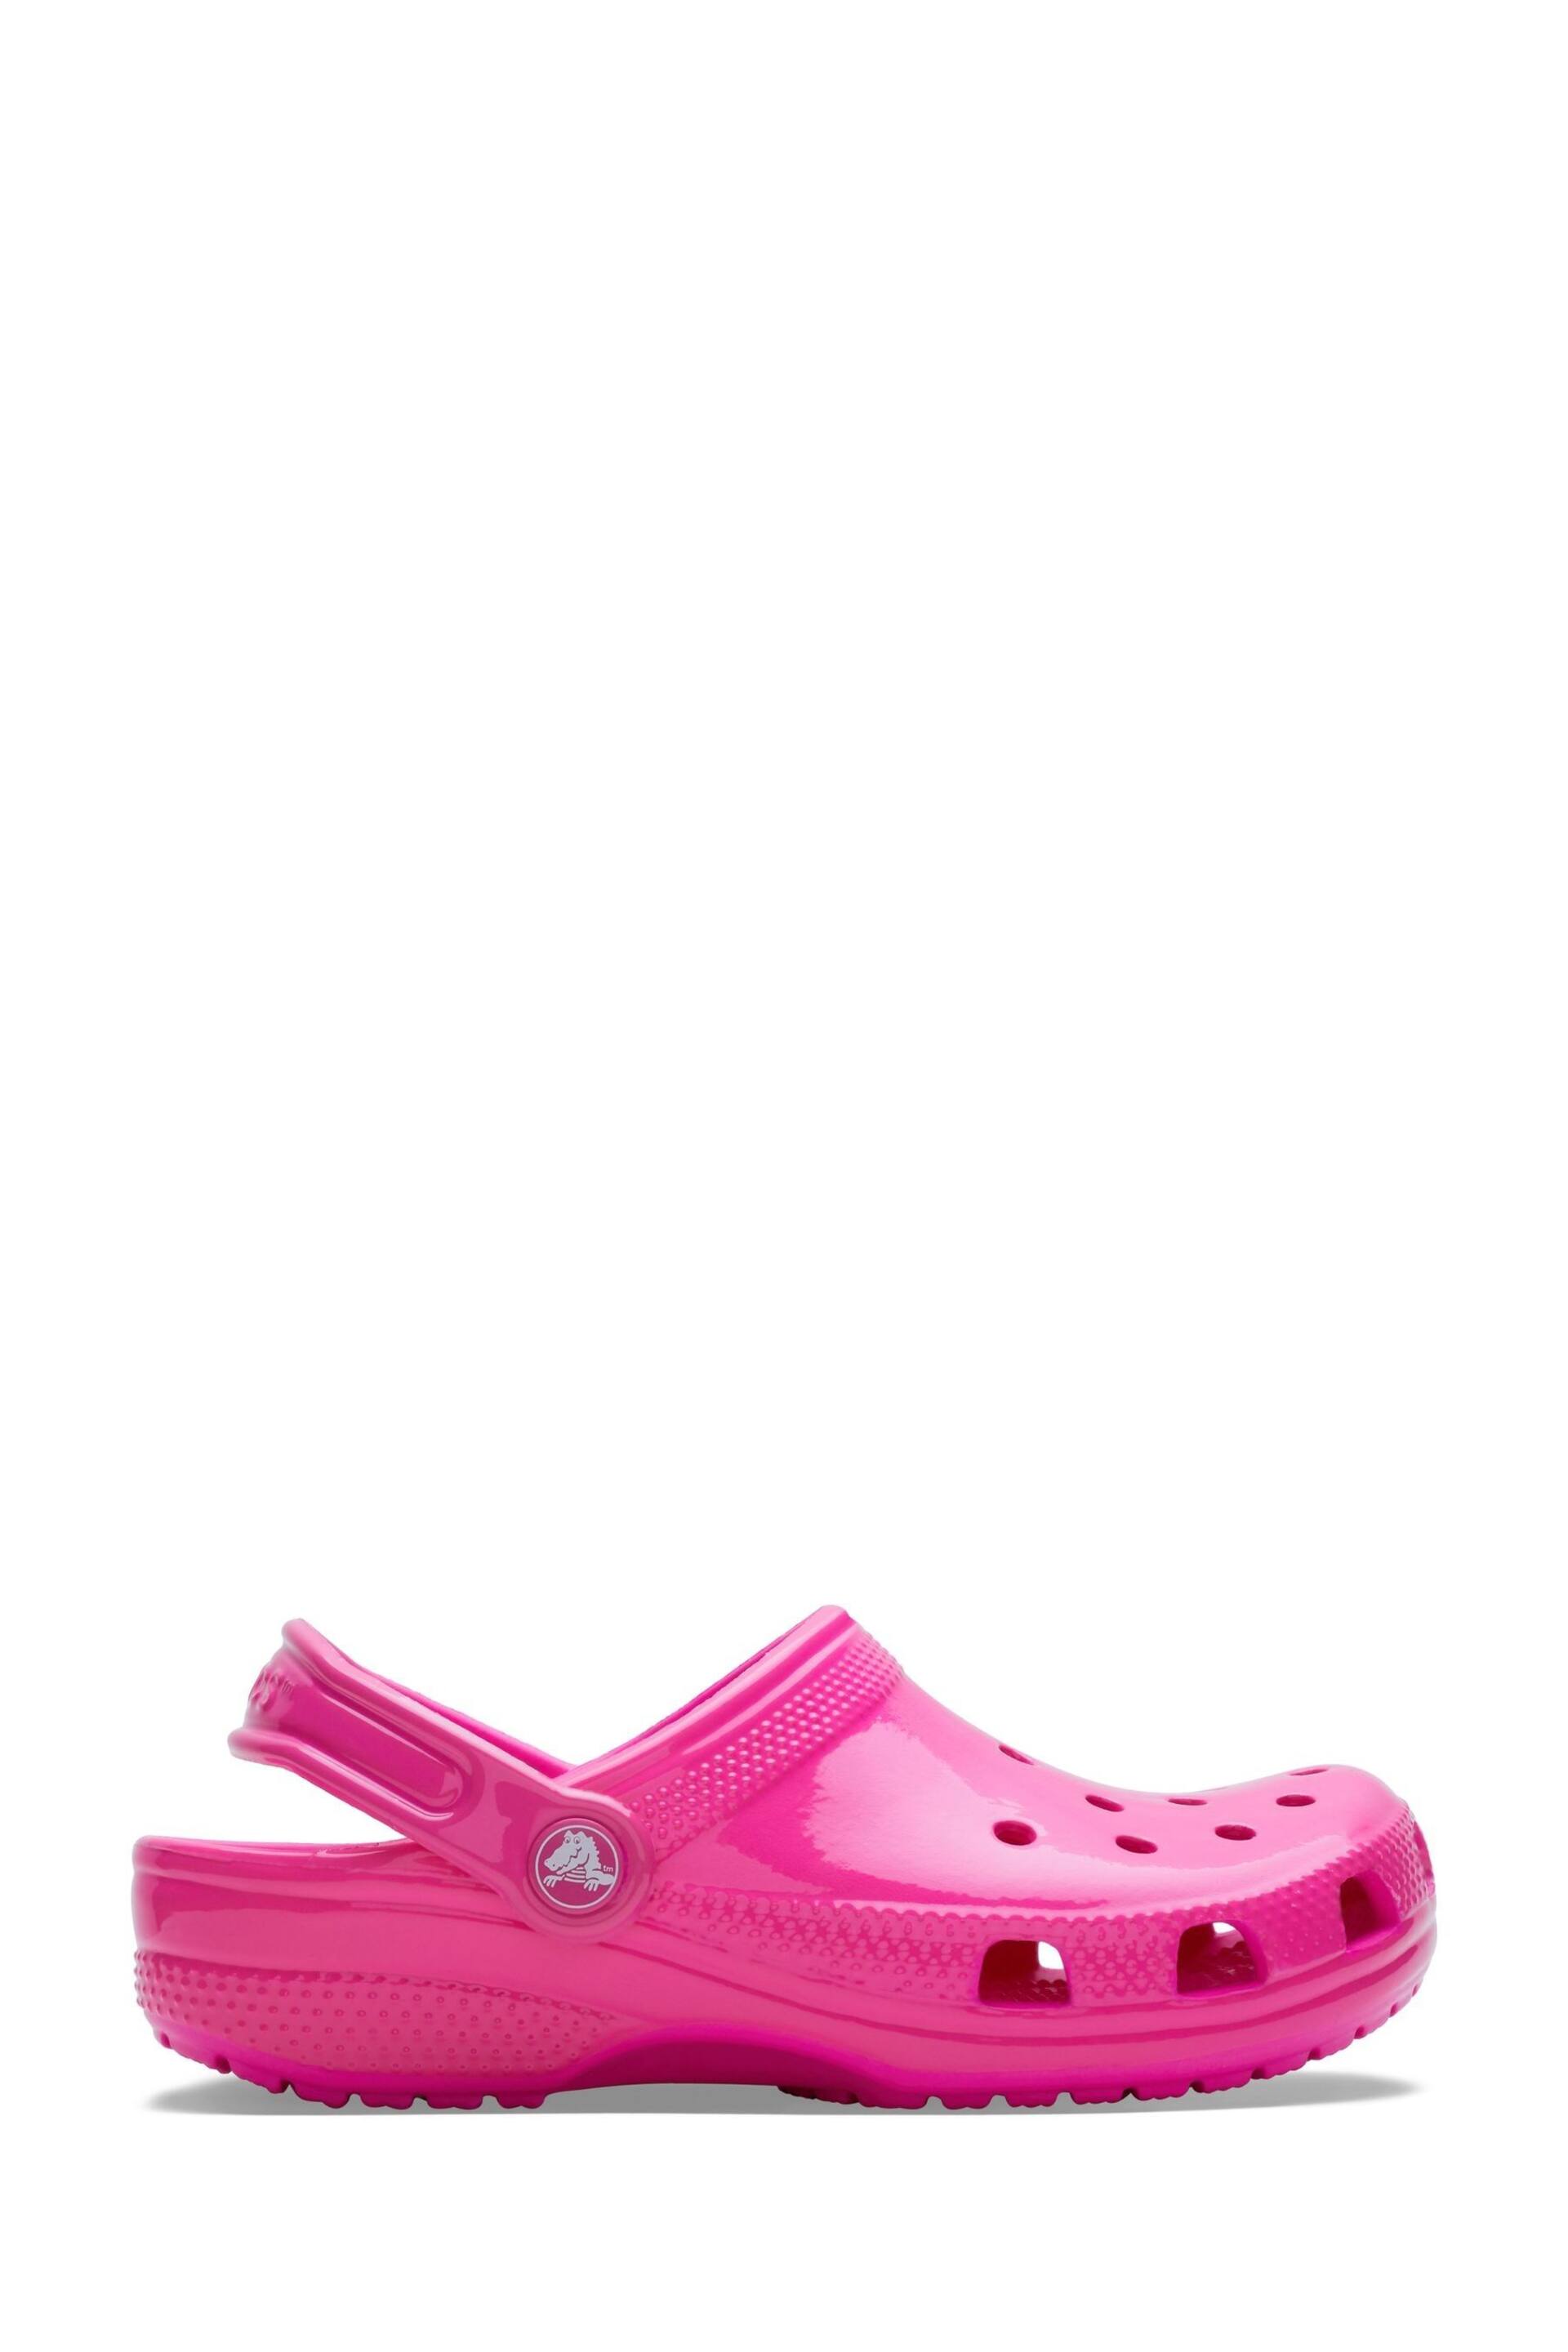 Crocs Classic Neon Toddler Clog - Image 1 of 7